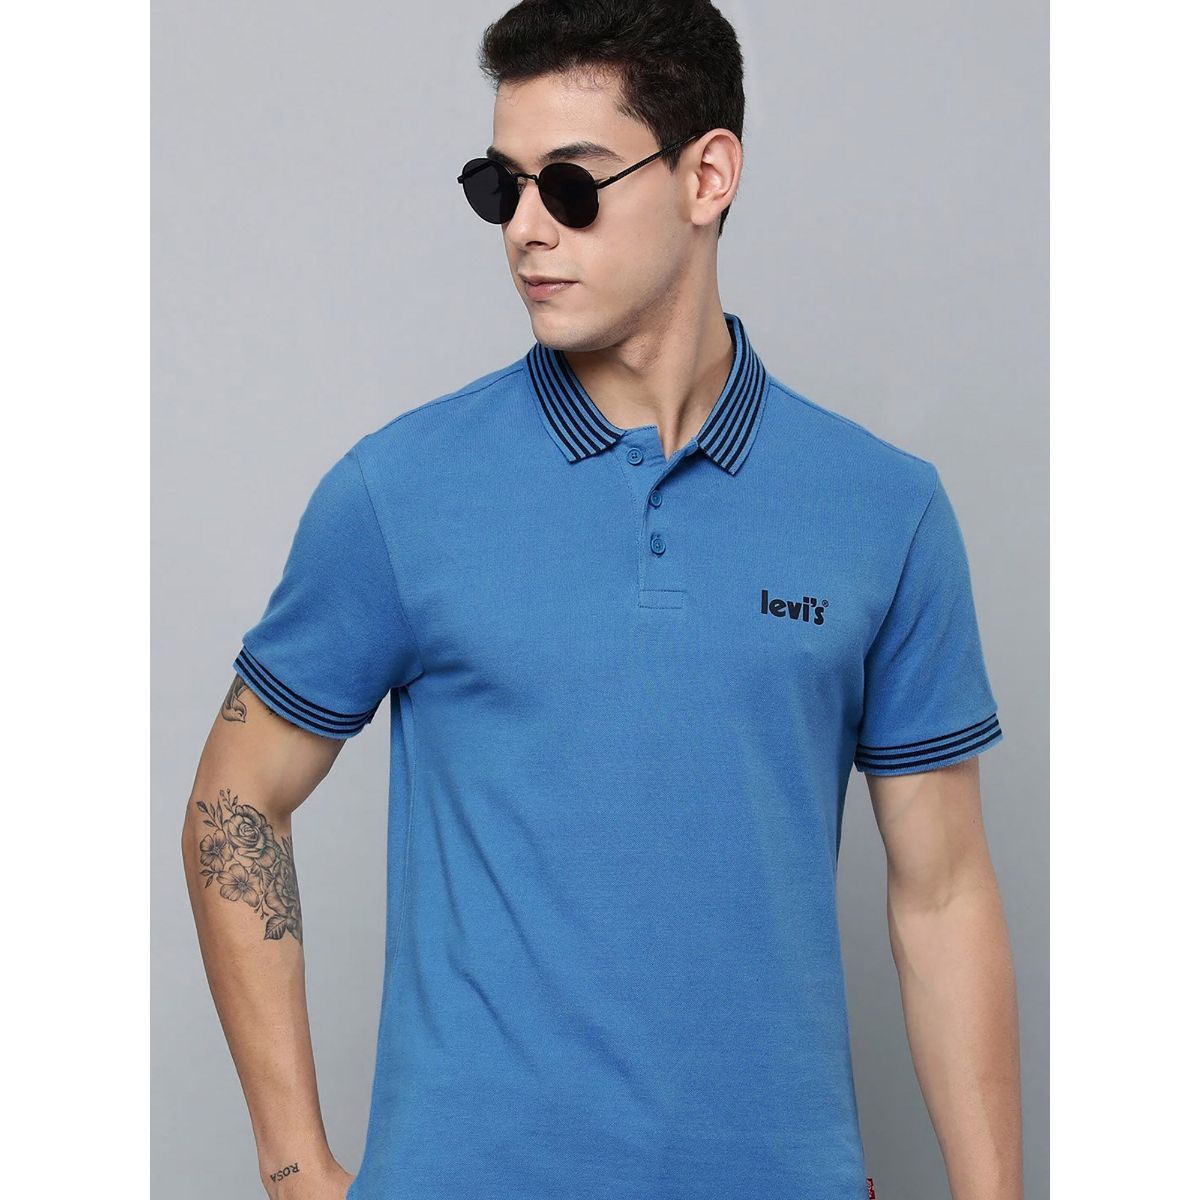 Levi's Vallarta Blue Solid Polo T-Shirts: Buy Levi's Vallarta Blue ...